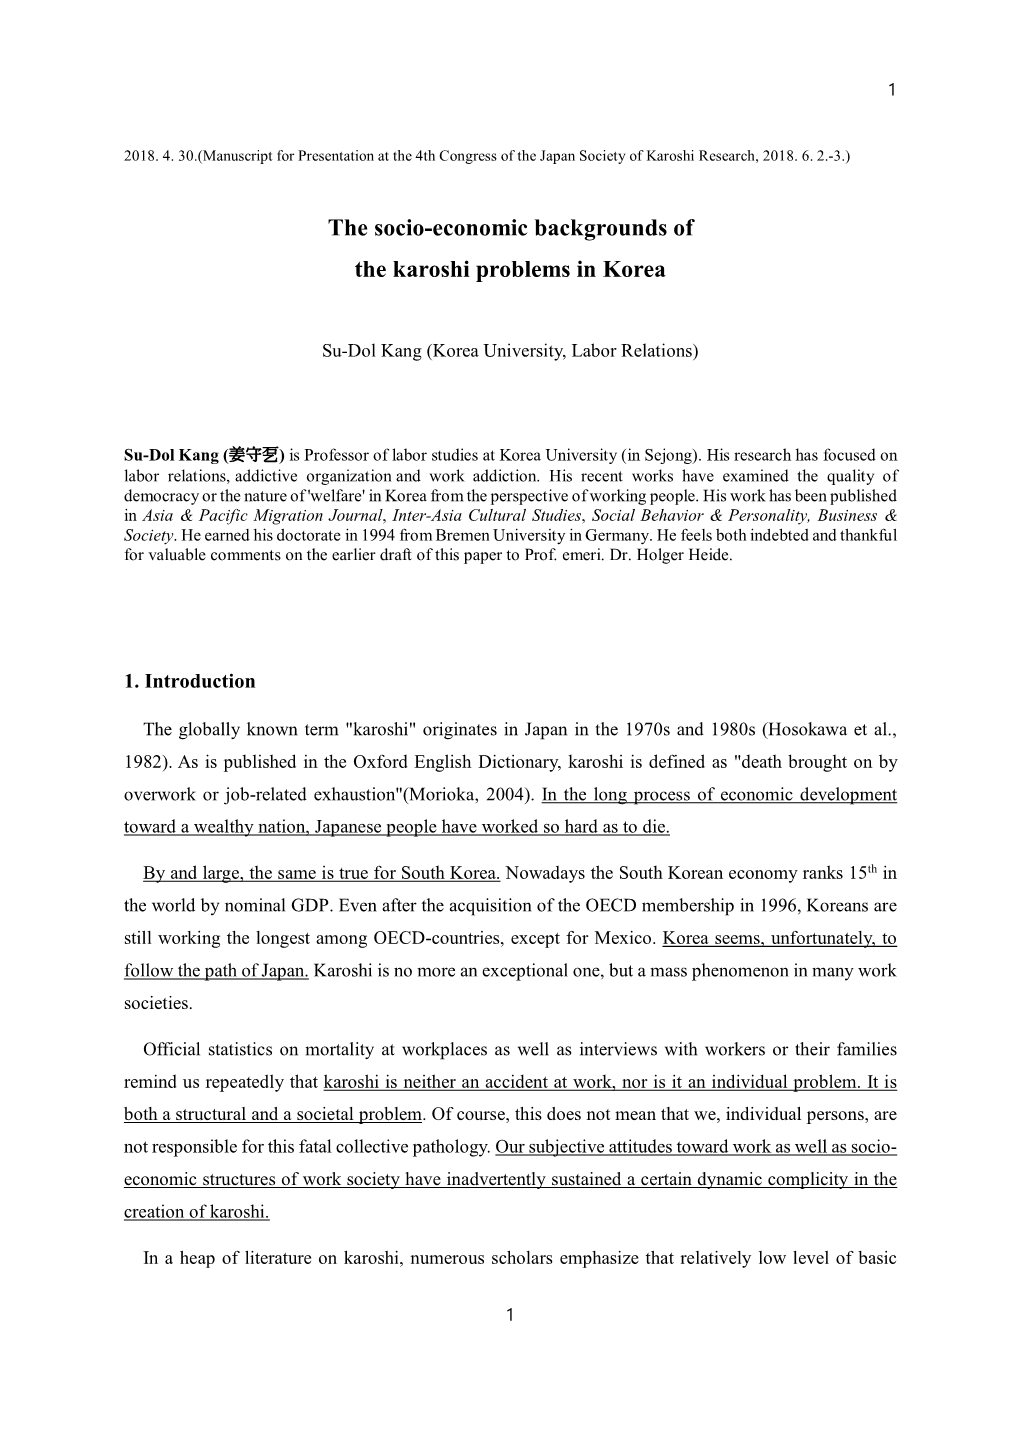 The Socio-Economic Backgrounds of the Karoshi Problems in Korea